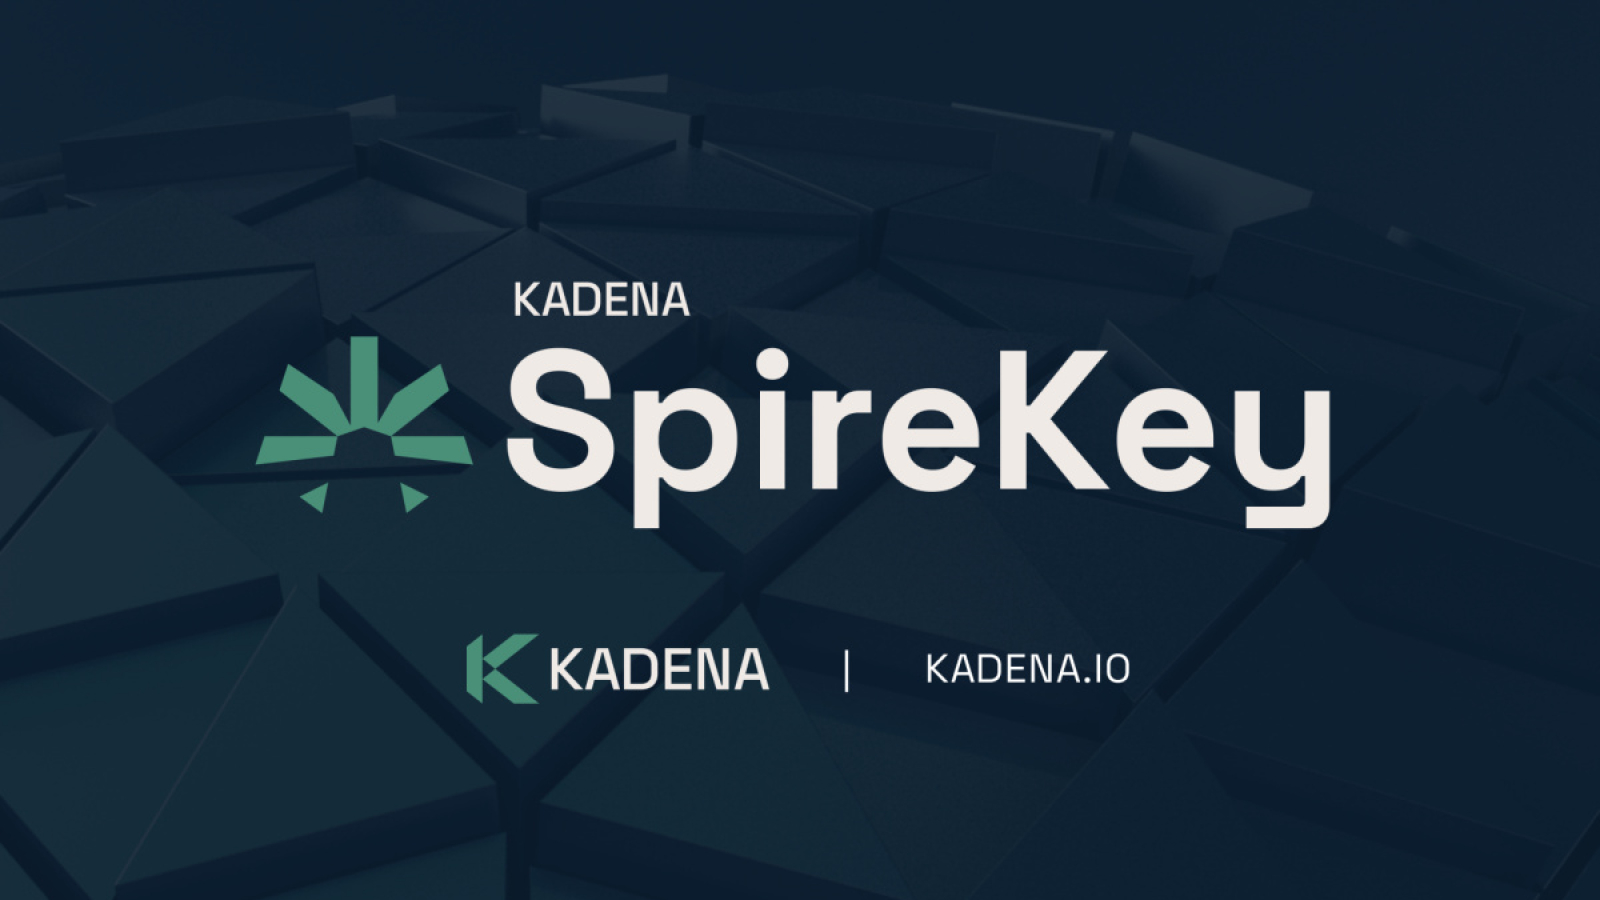 Kadena SpireKey Integrates with WebAuthn to Provide Seamless Web3 Interactions